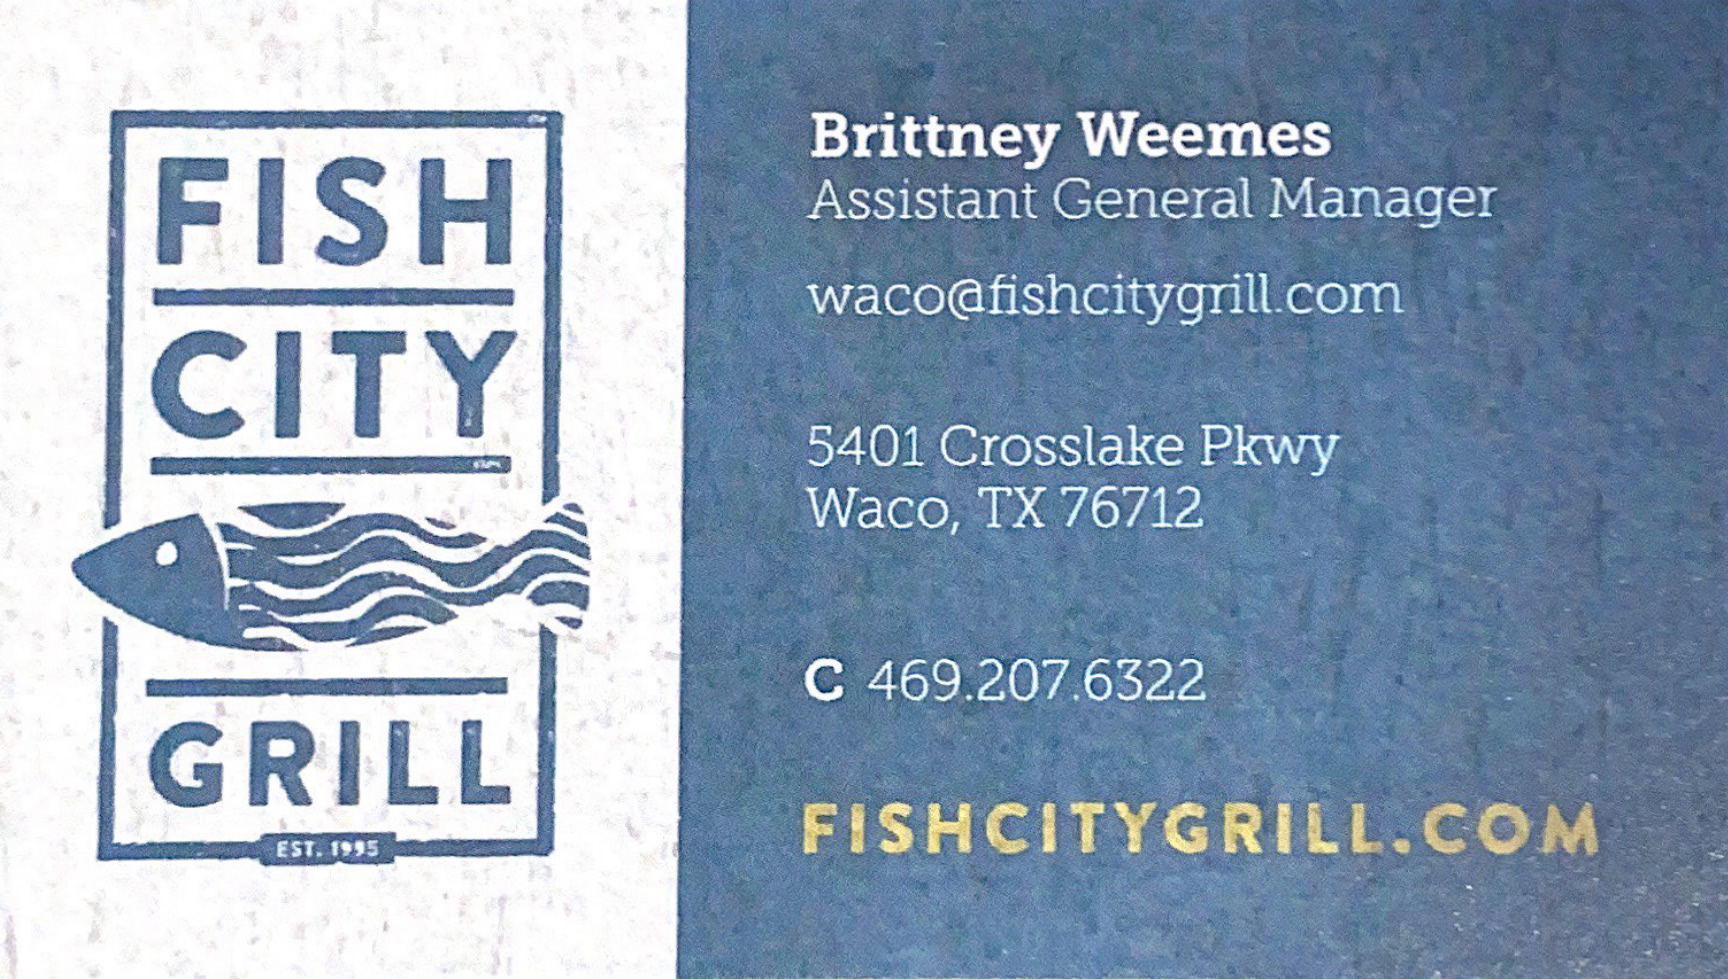 Brittney Weemes Waco Fish City Grill